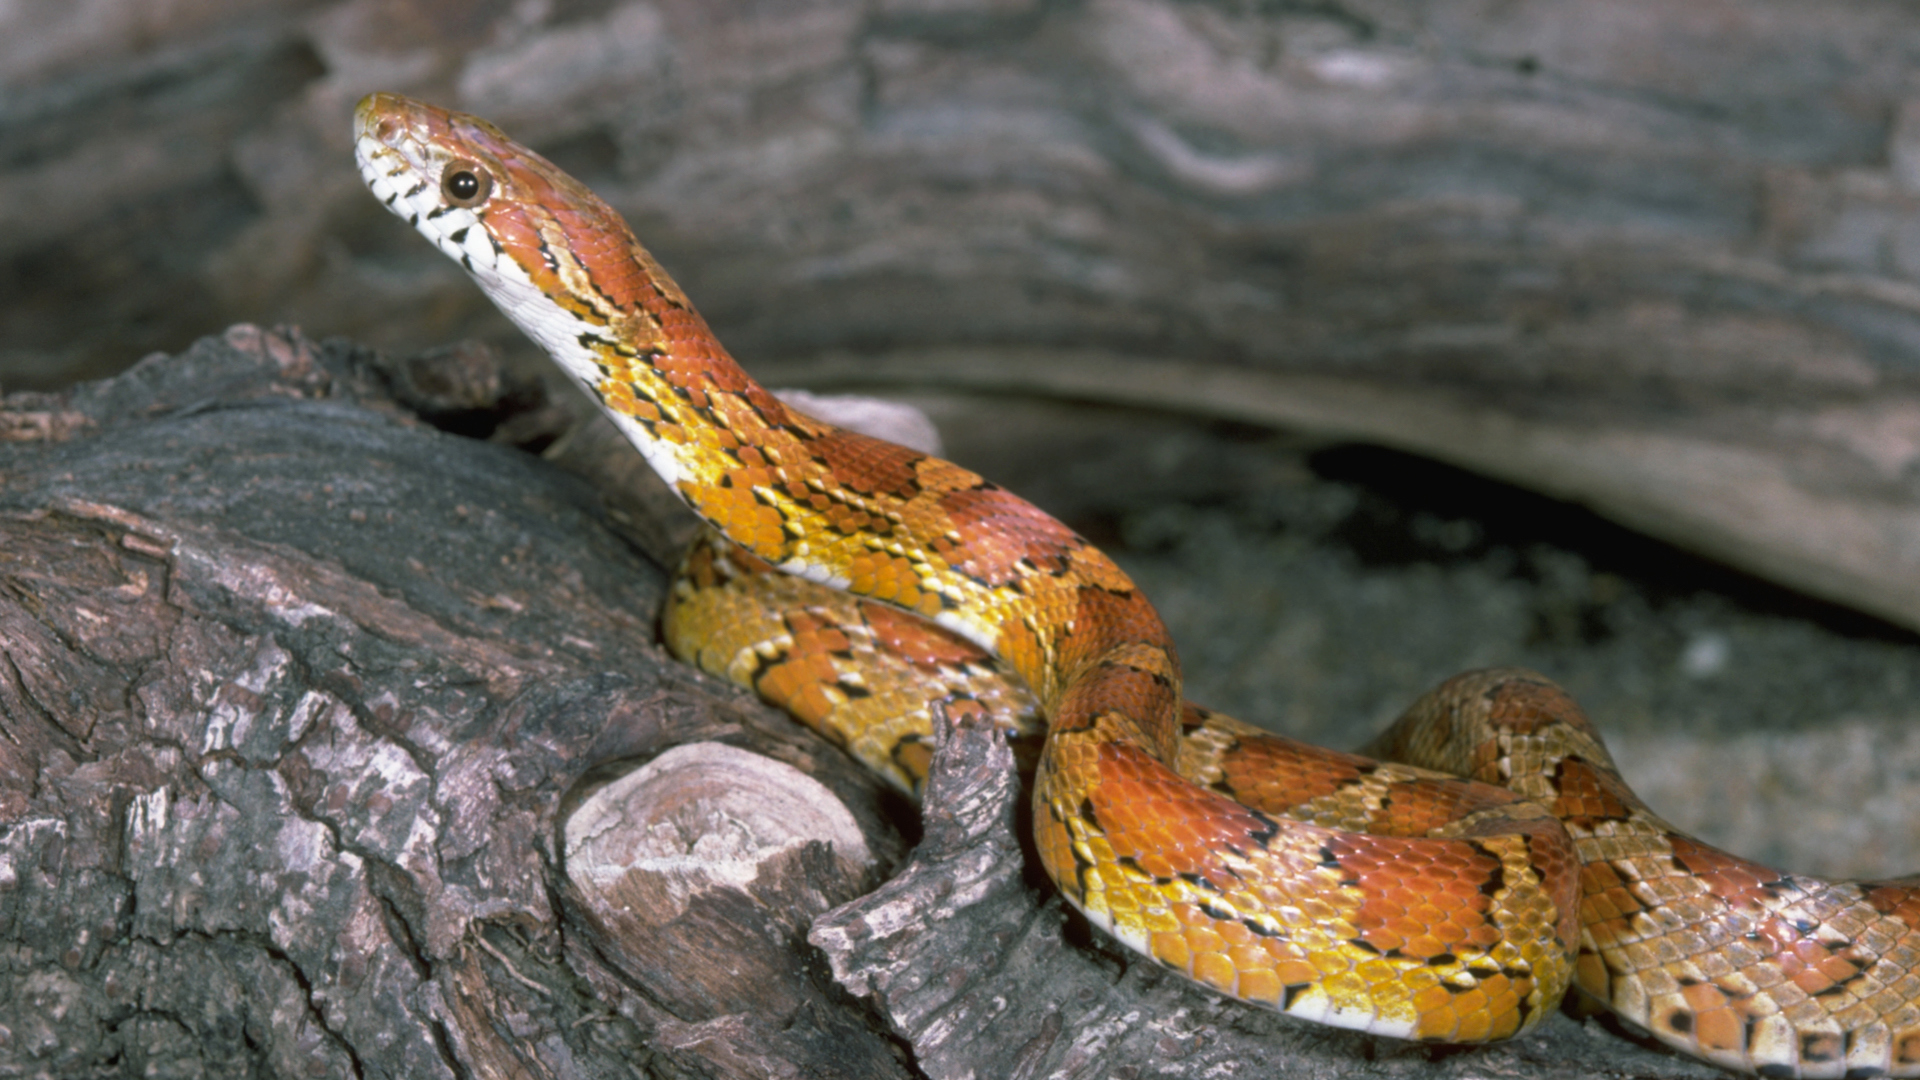 A photograph of a corn snake